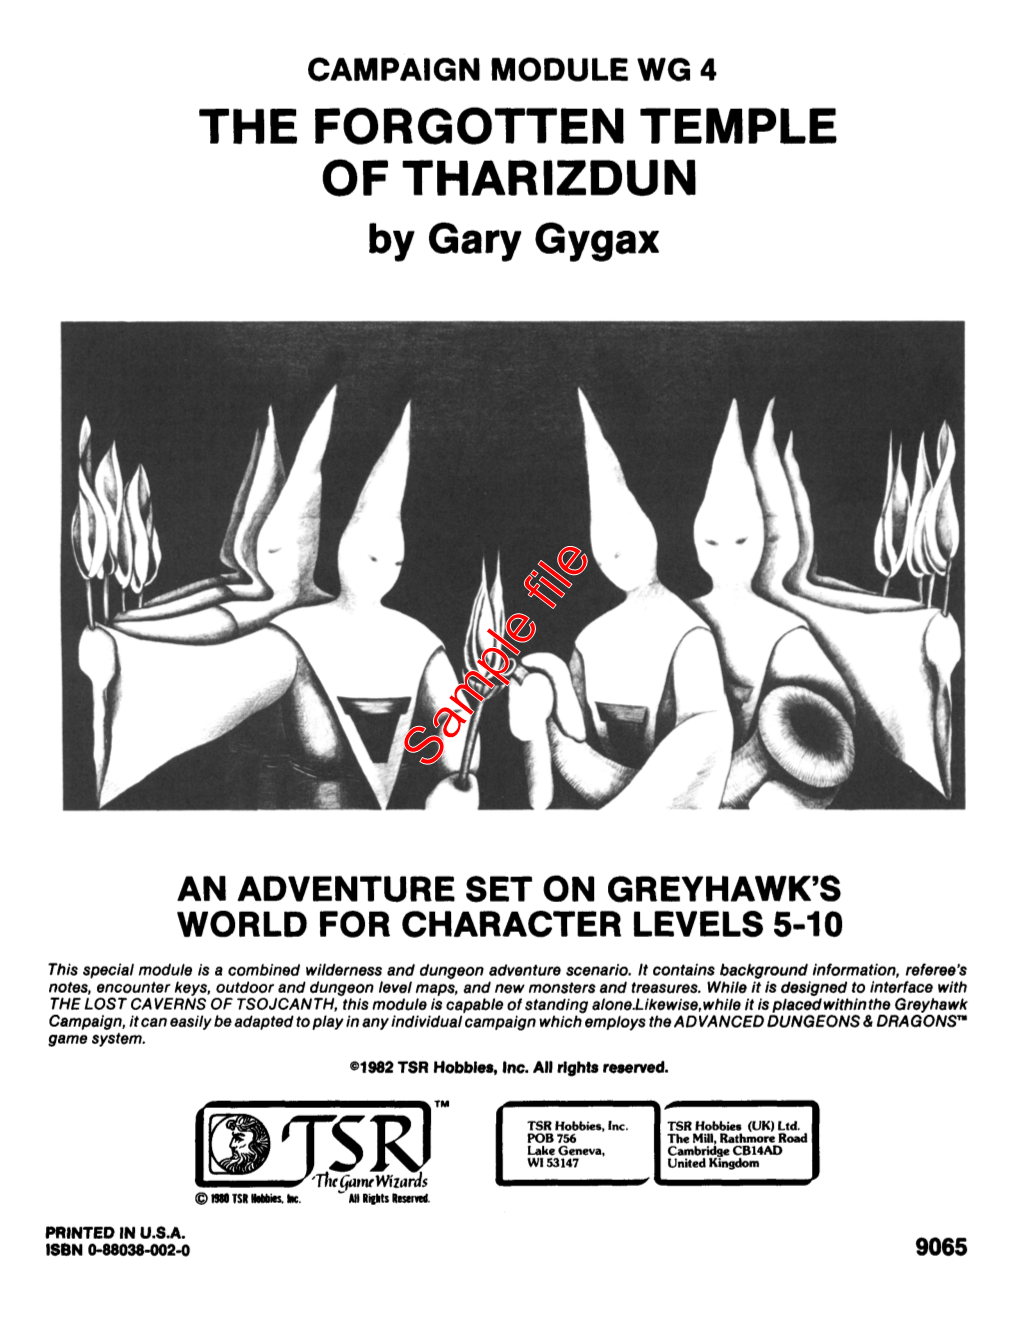 THE FORGOTTEN TEMPLE of THARIZDUN by Gary Gygax